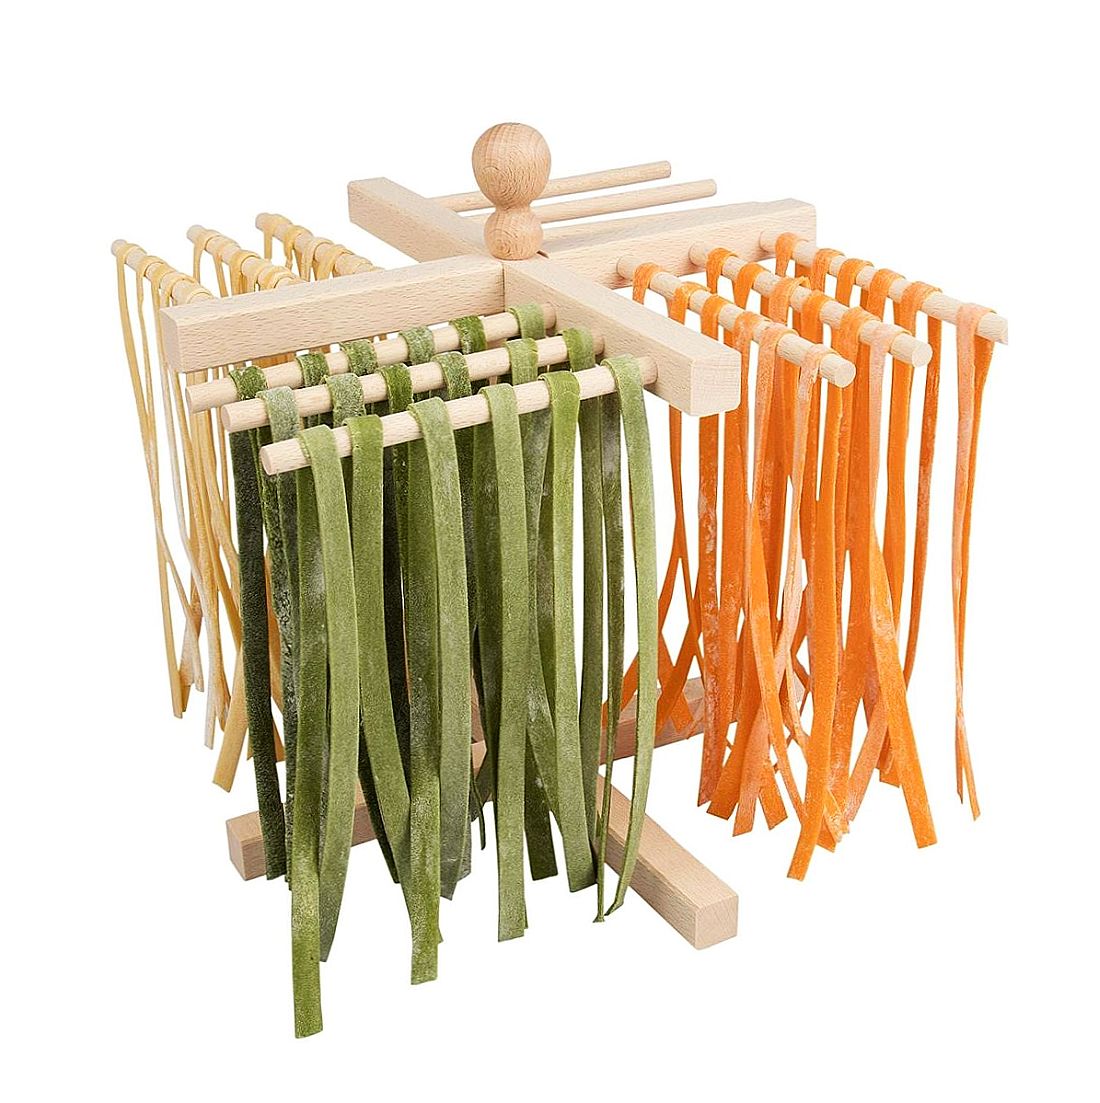 IMPERIA Stendipasta desktop pasta drying rack